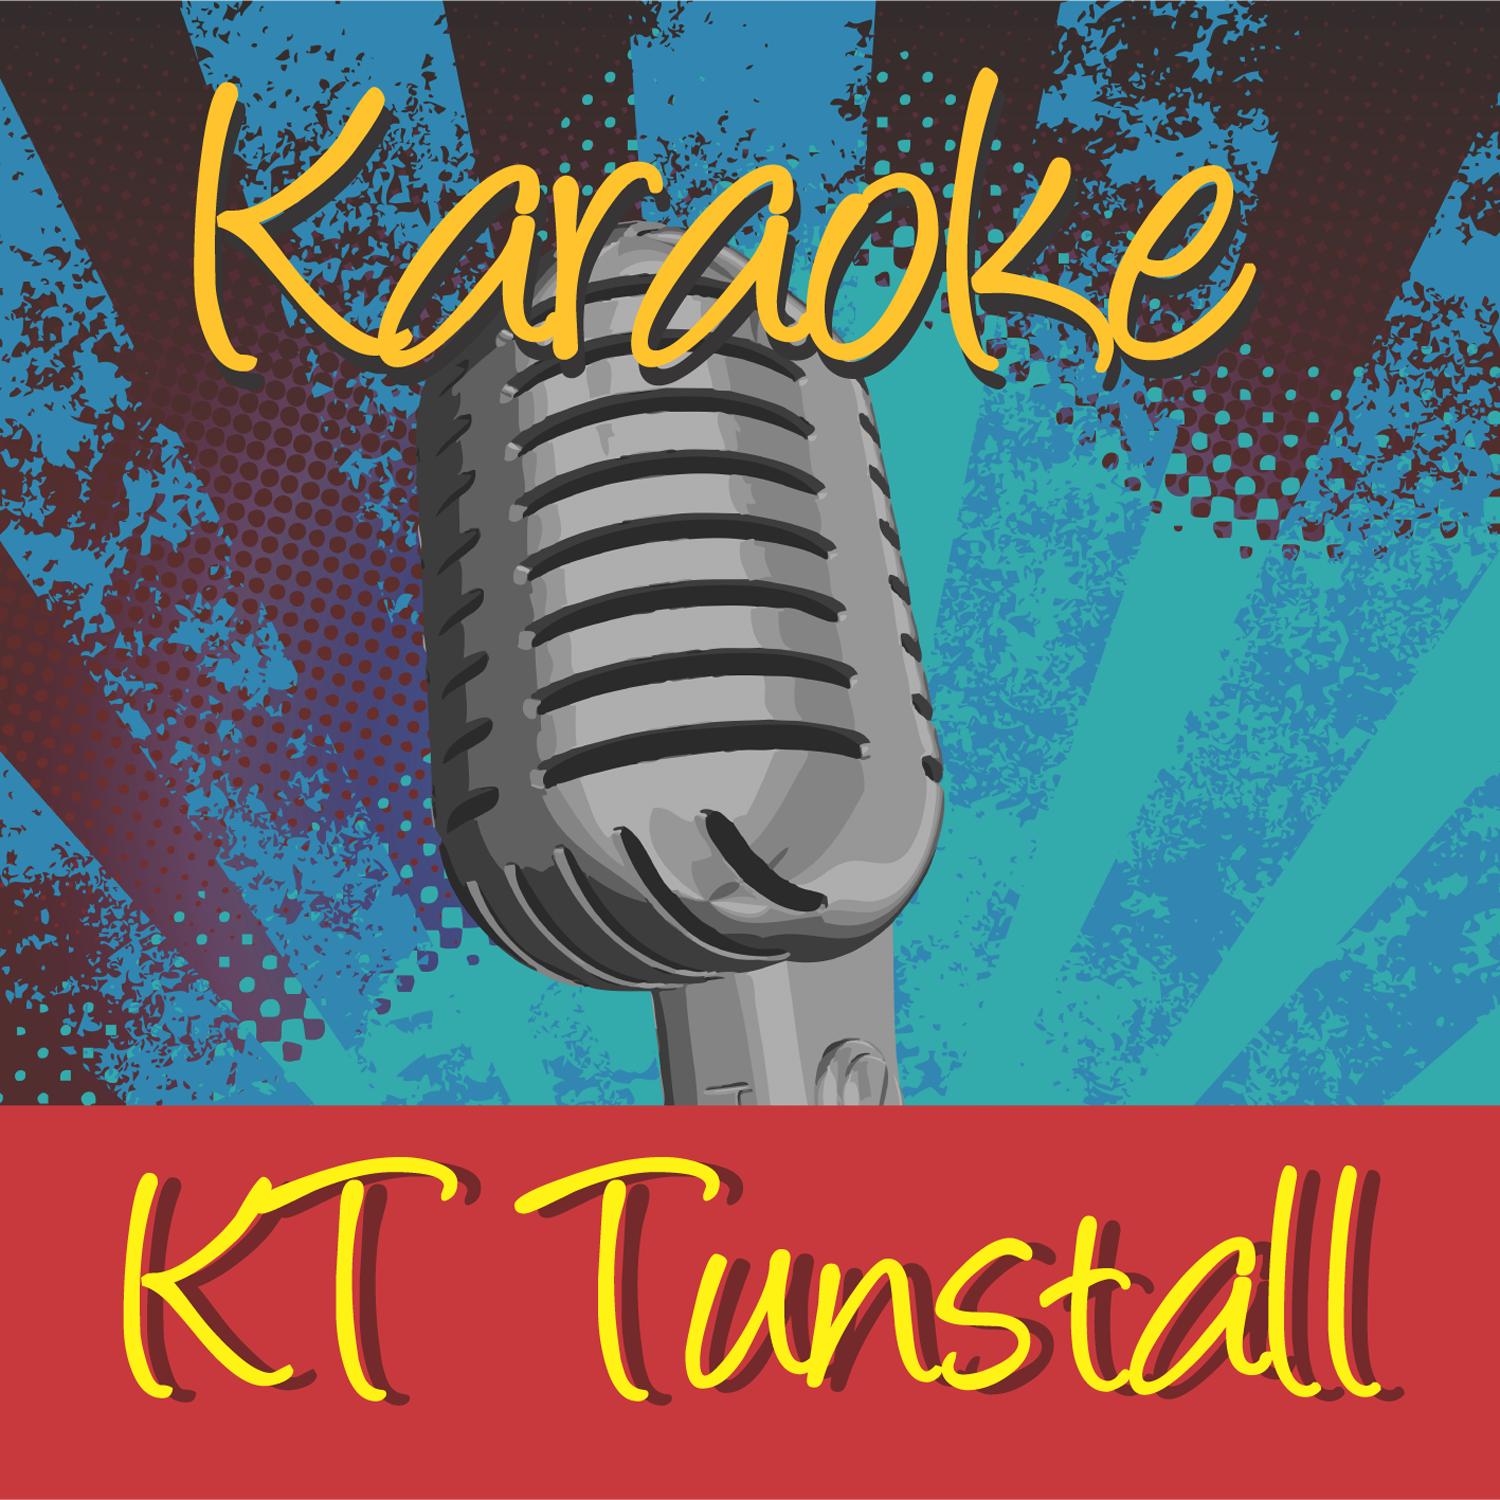 Karaoke - KT Tunstall